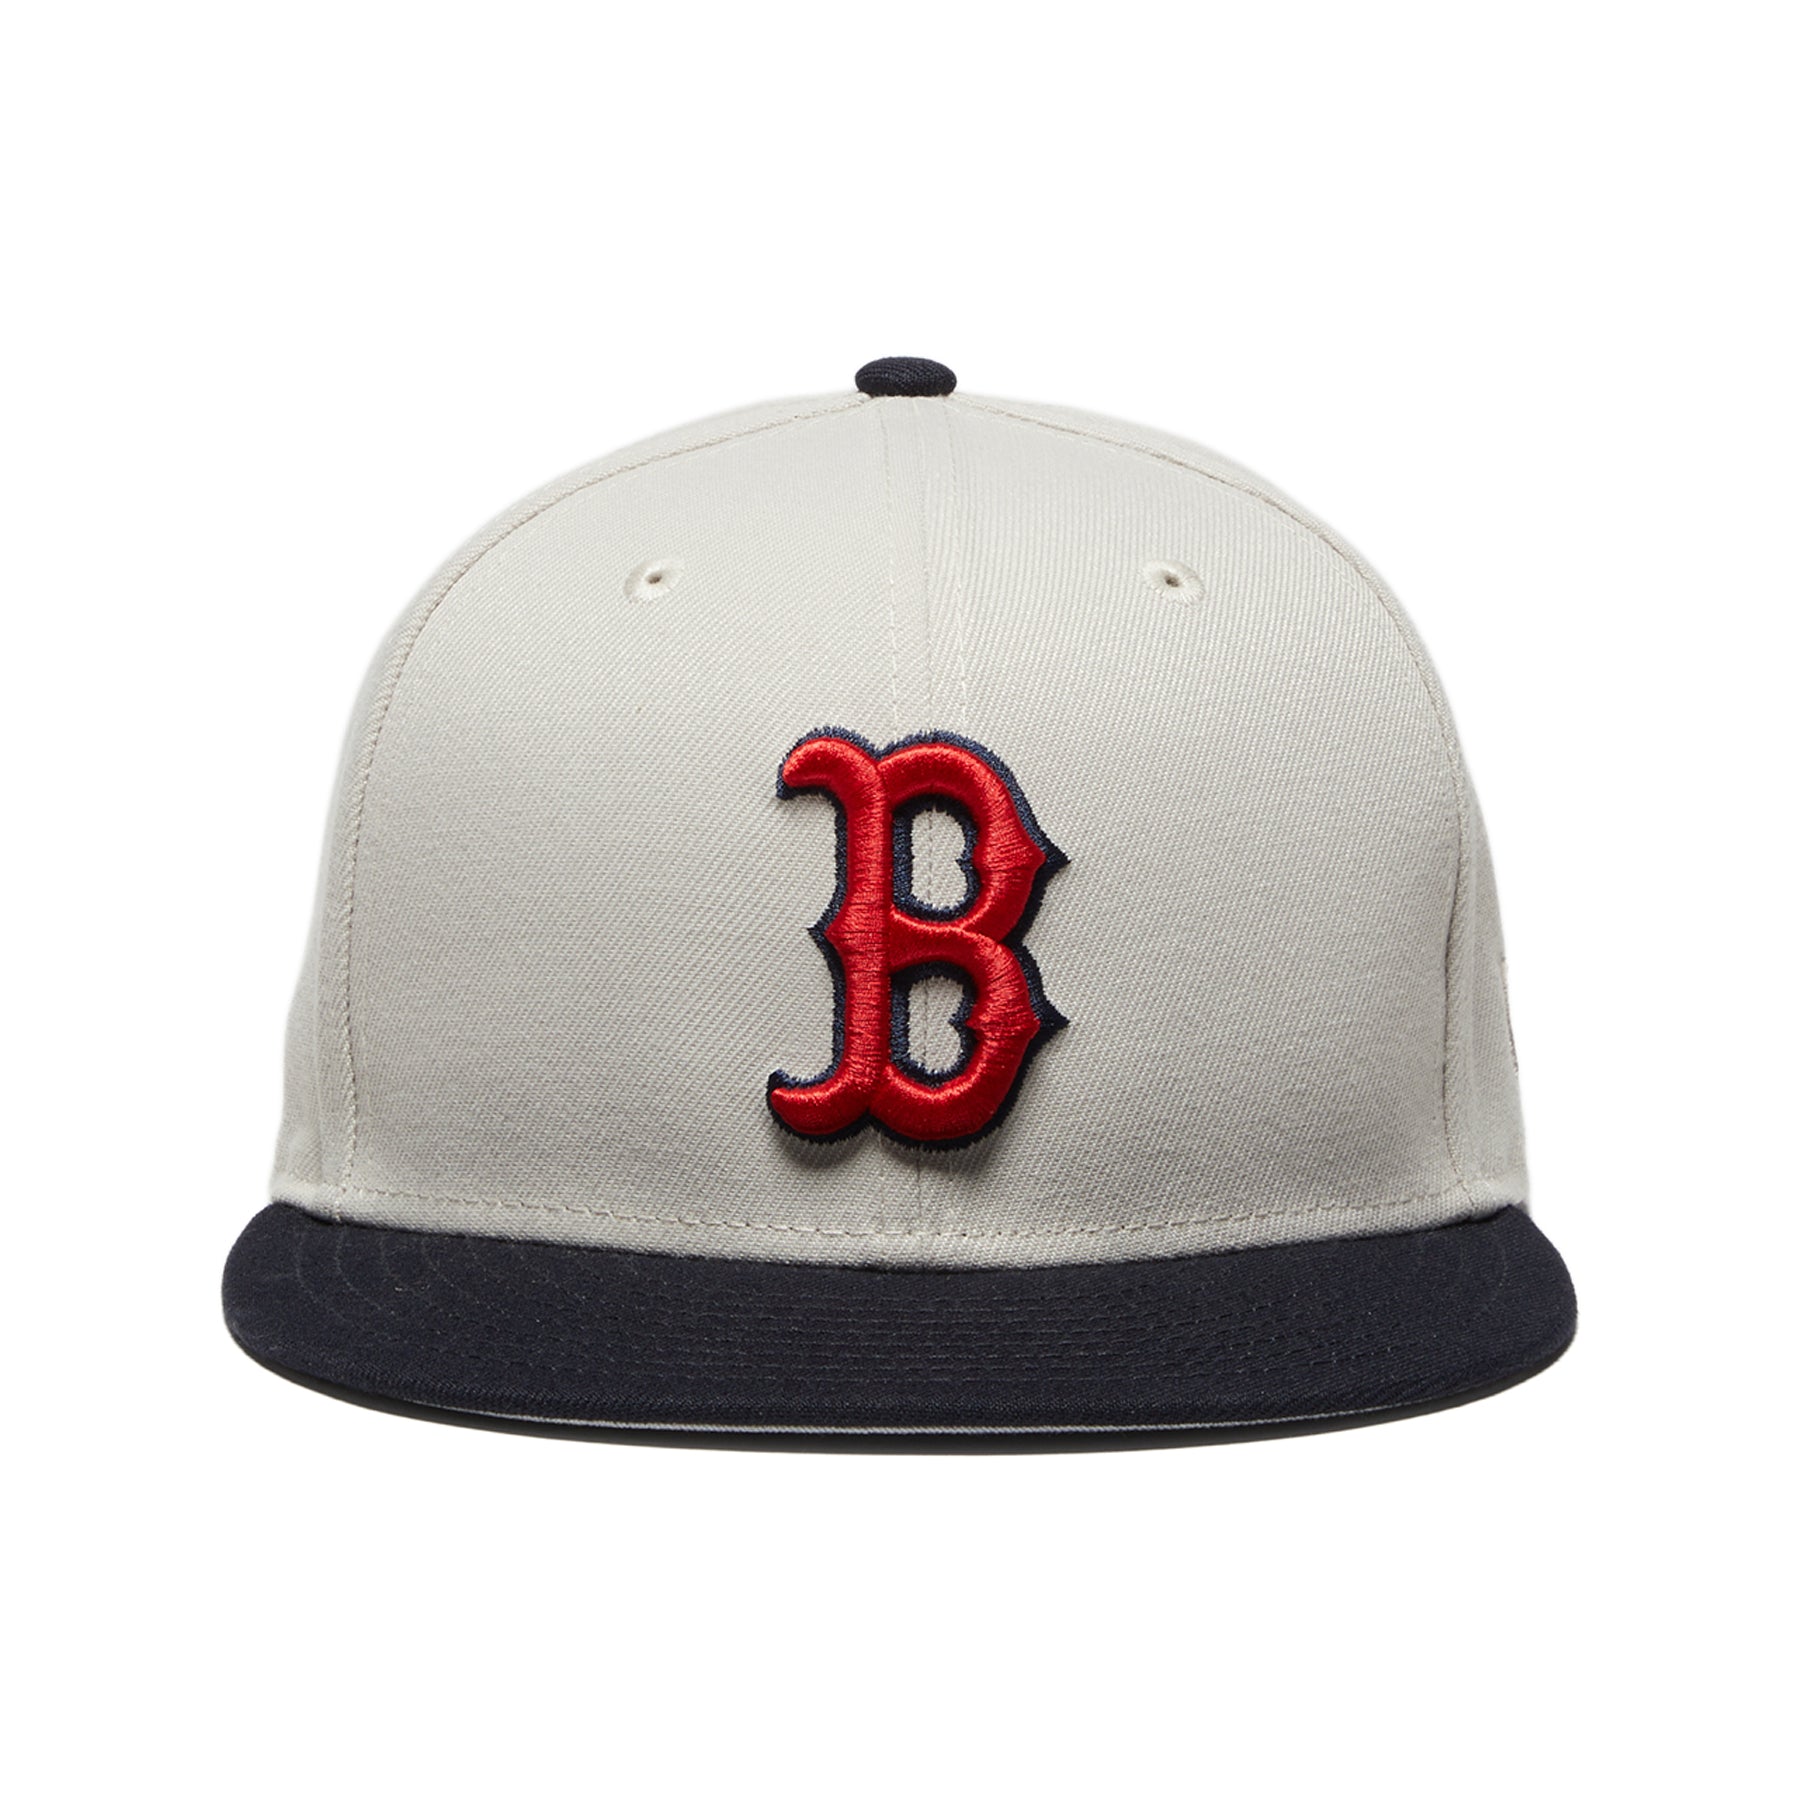 white boston red sox cap